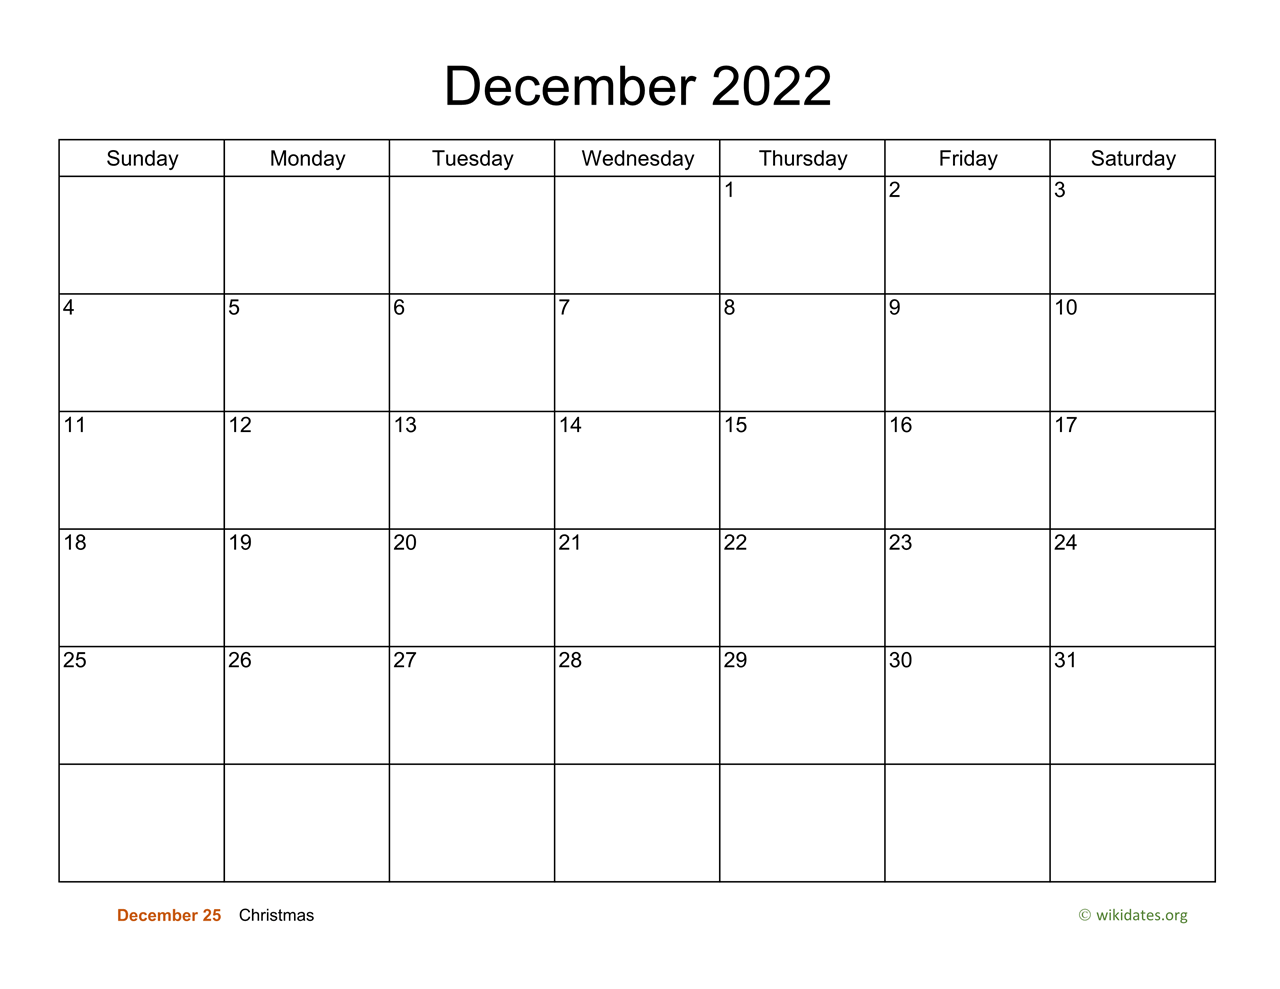 December Calendar 2022 Printable Basic Calendar For December 2022 | Wikidates.org